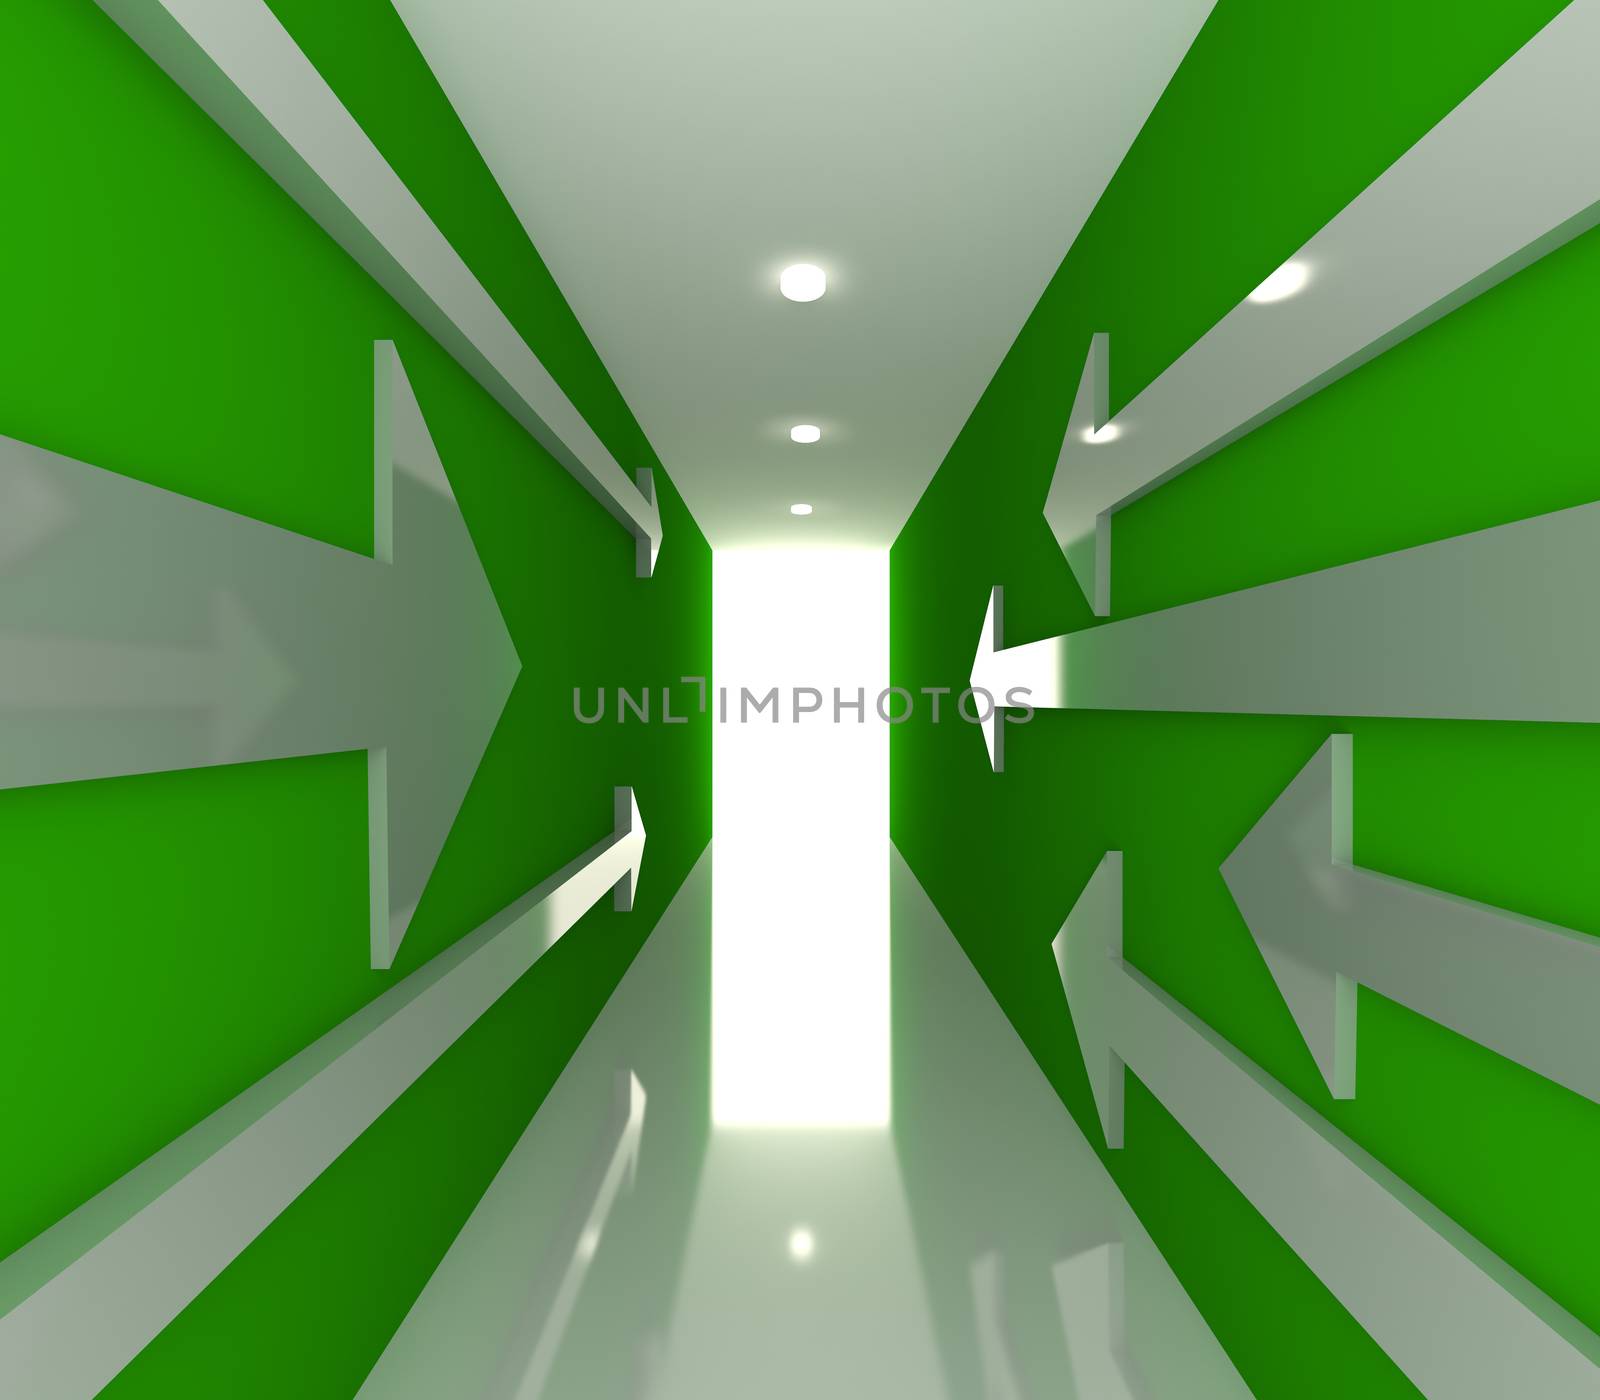 Green Empty Room With Arrow by sumetho